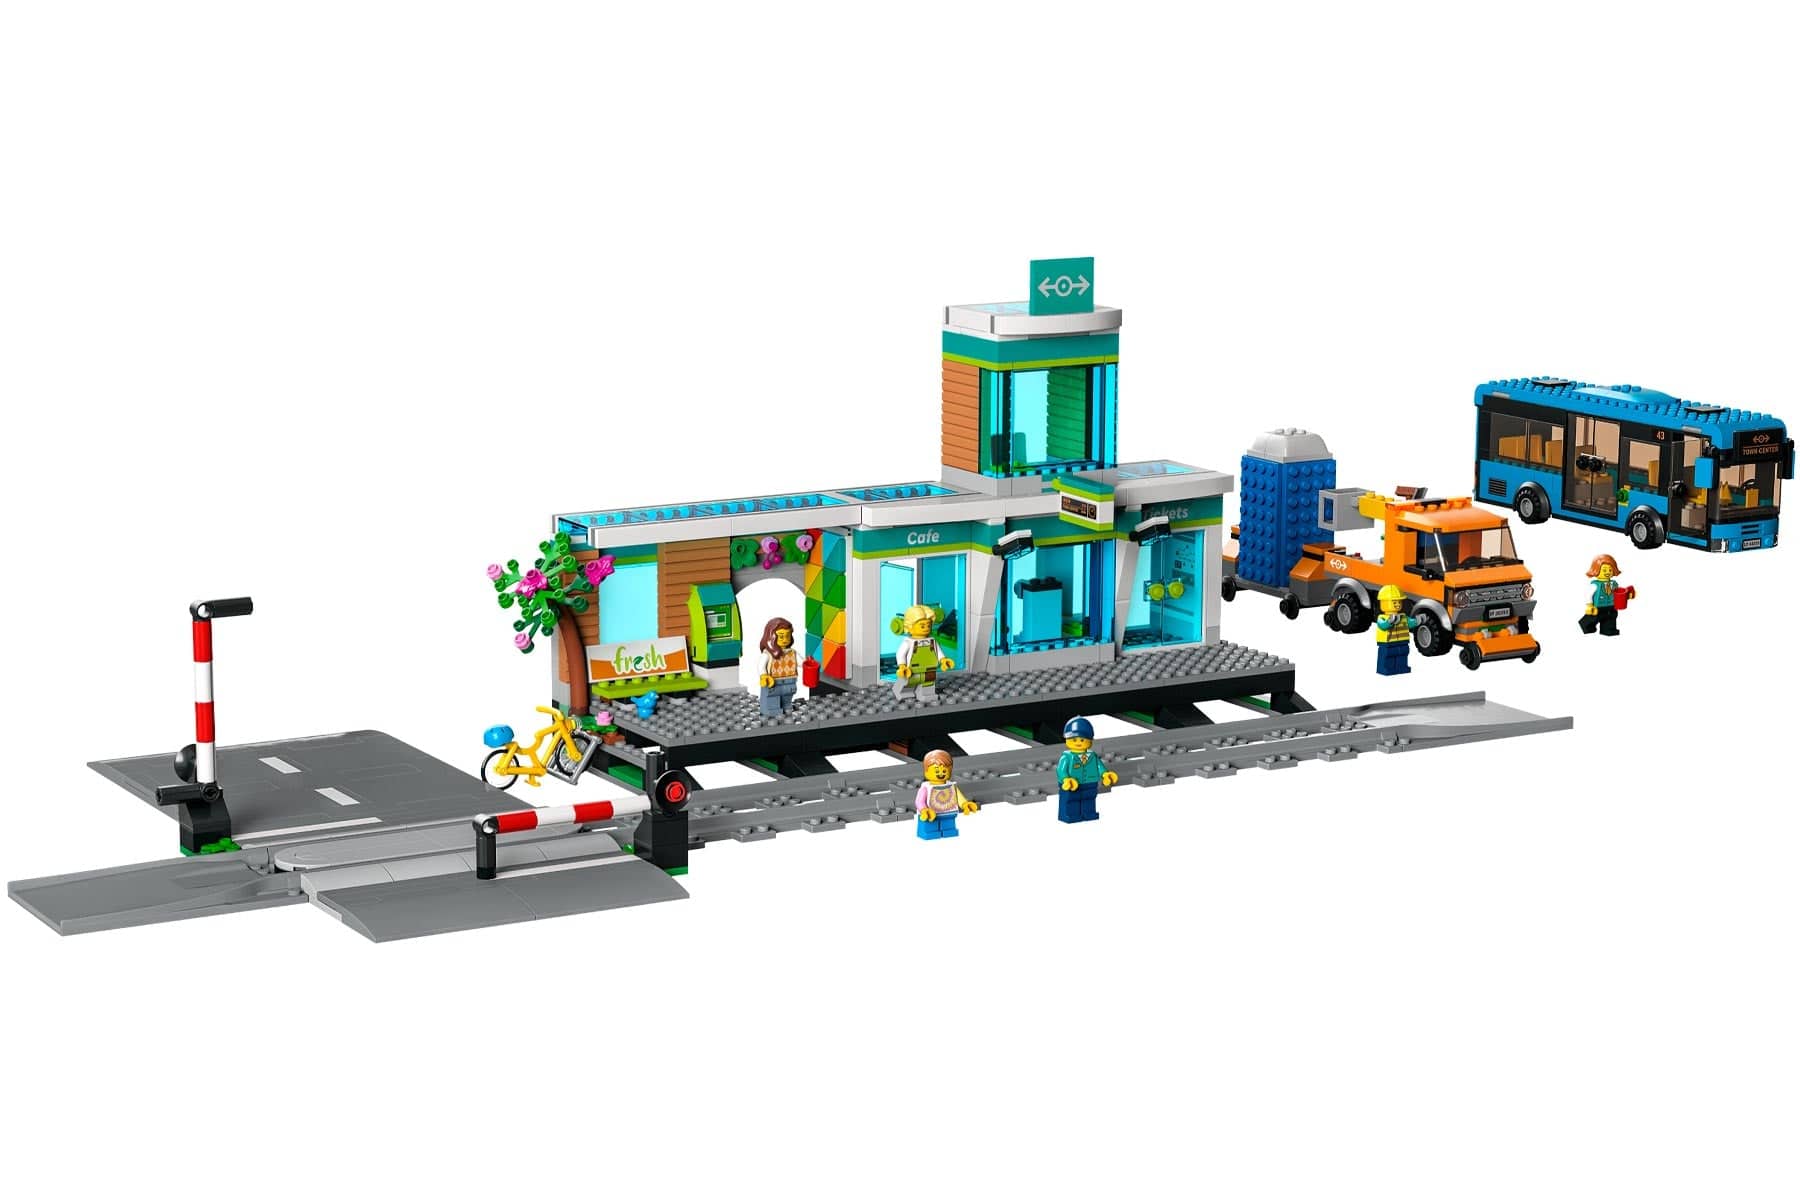 LEGO City Train Station 60335